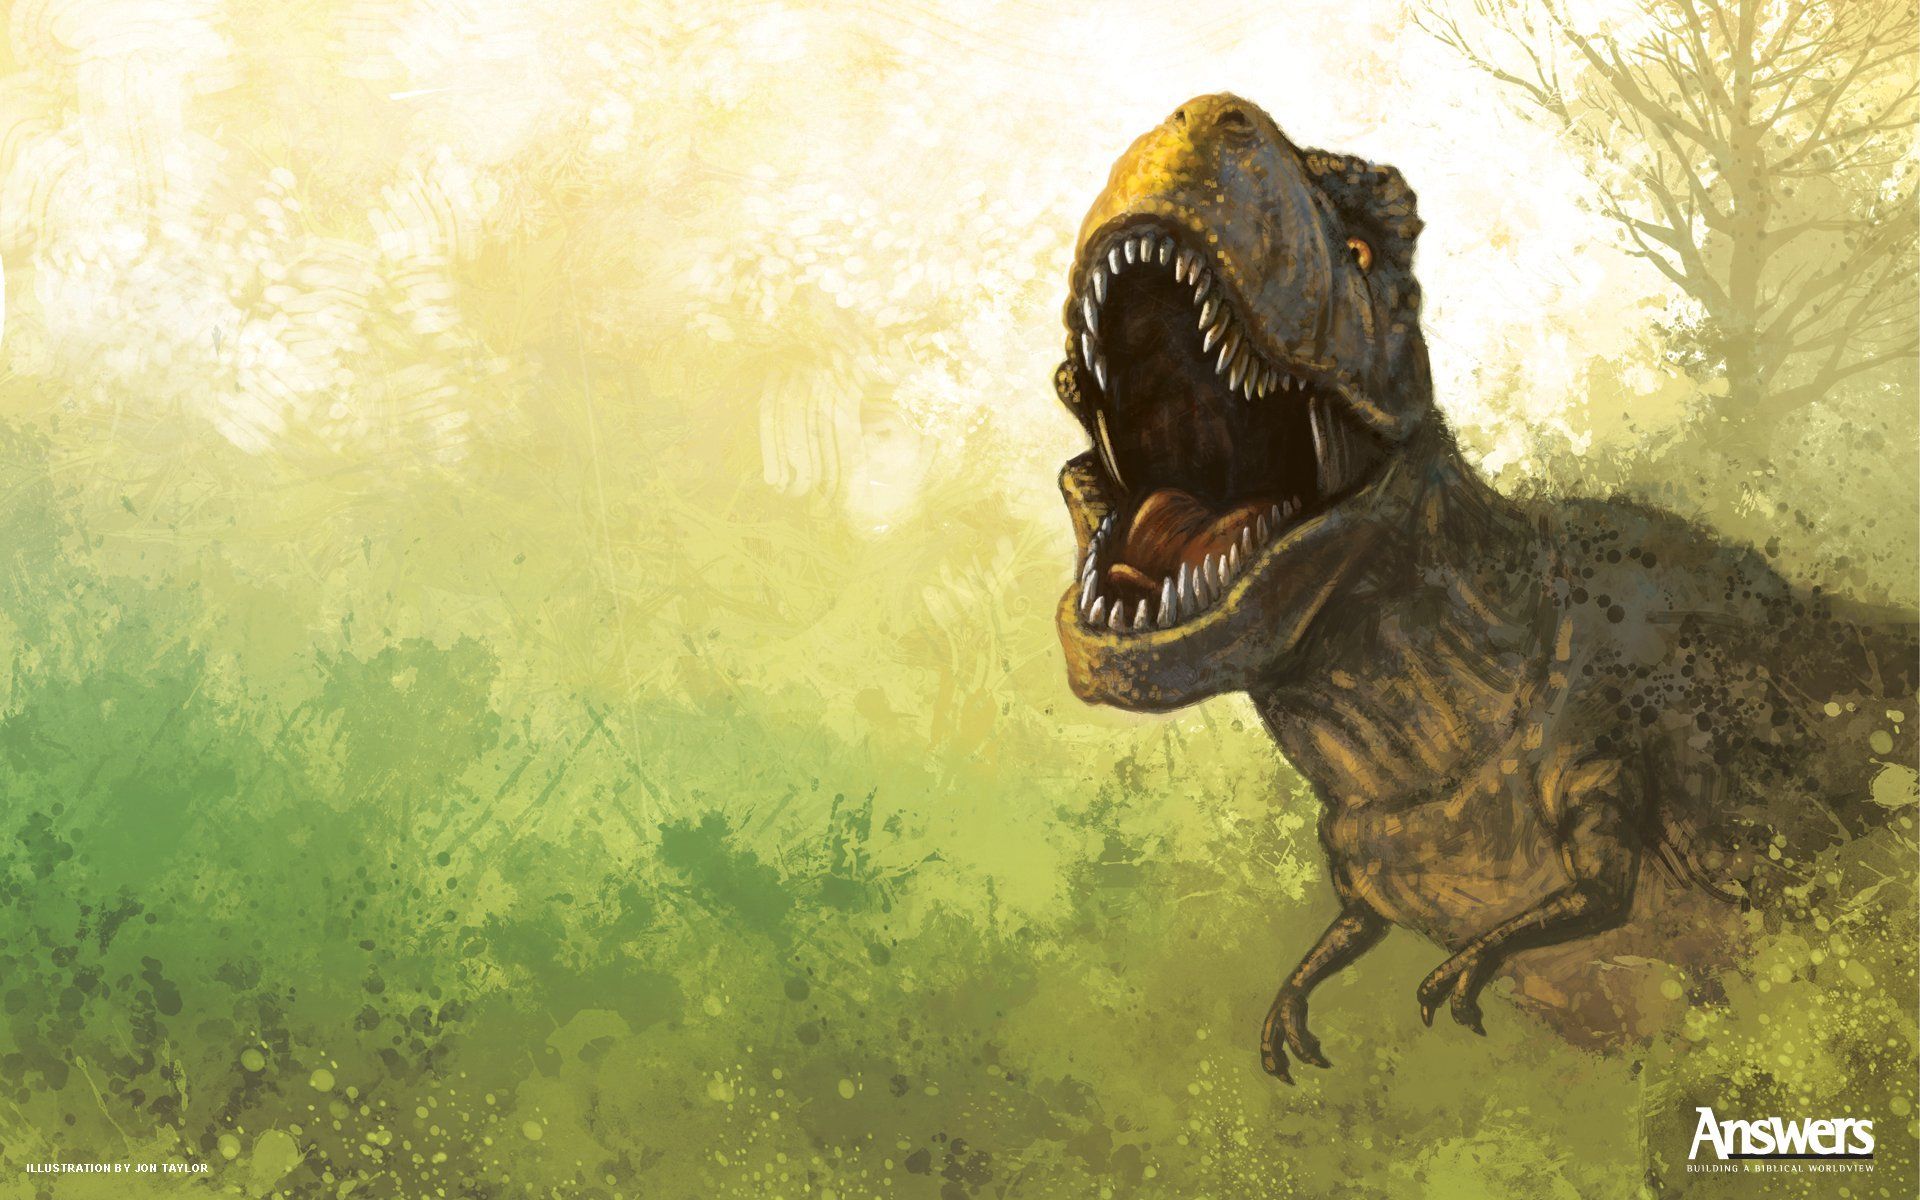 Free Desktop Dinosaur Wallpaper. Answers in Genesis